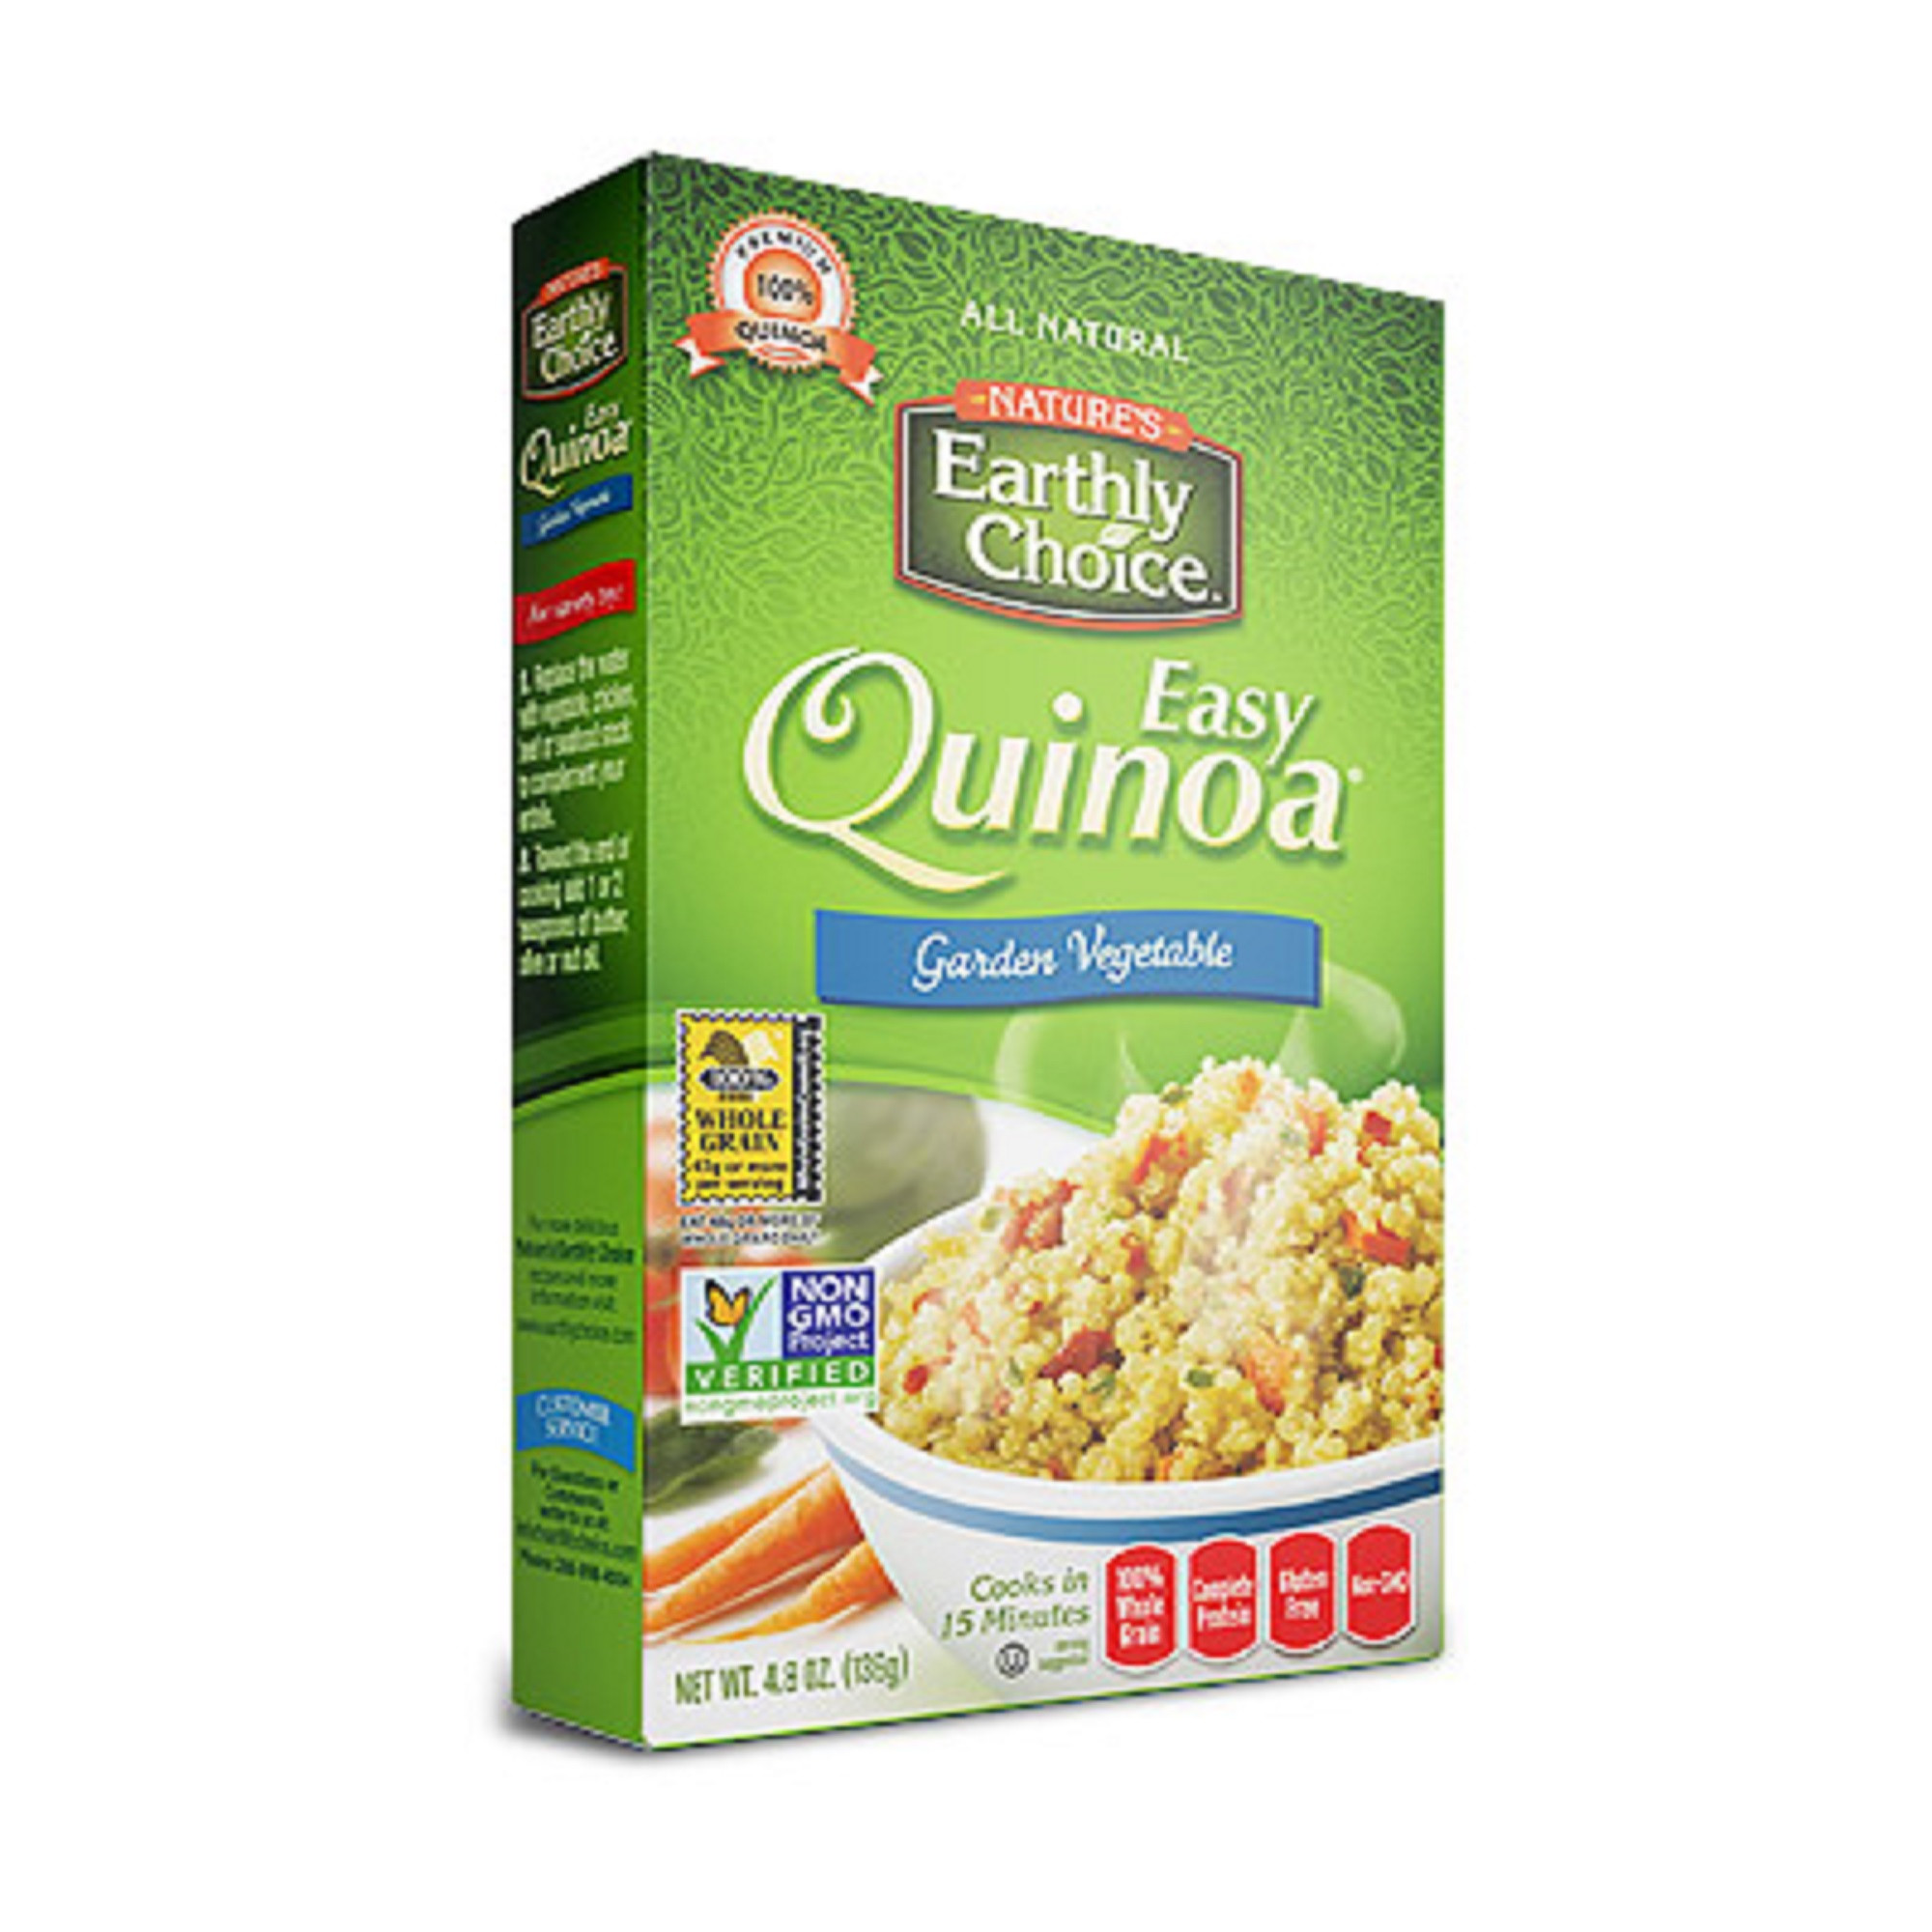 Earthly Grains Quinoa
 Easy Quinoa Nature s Earthly Choice